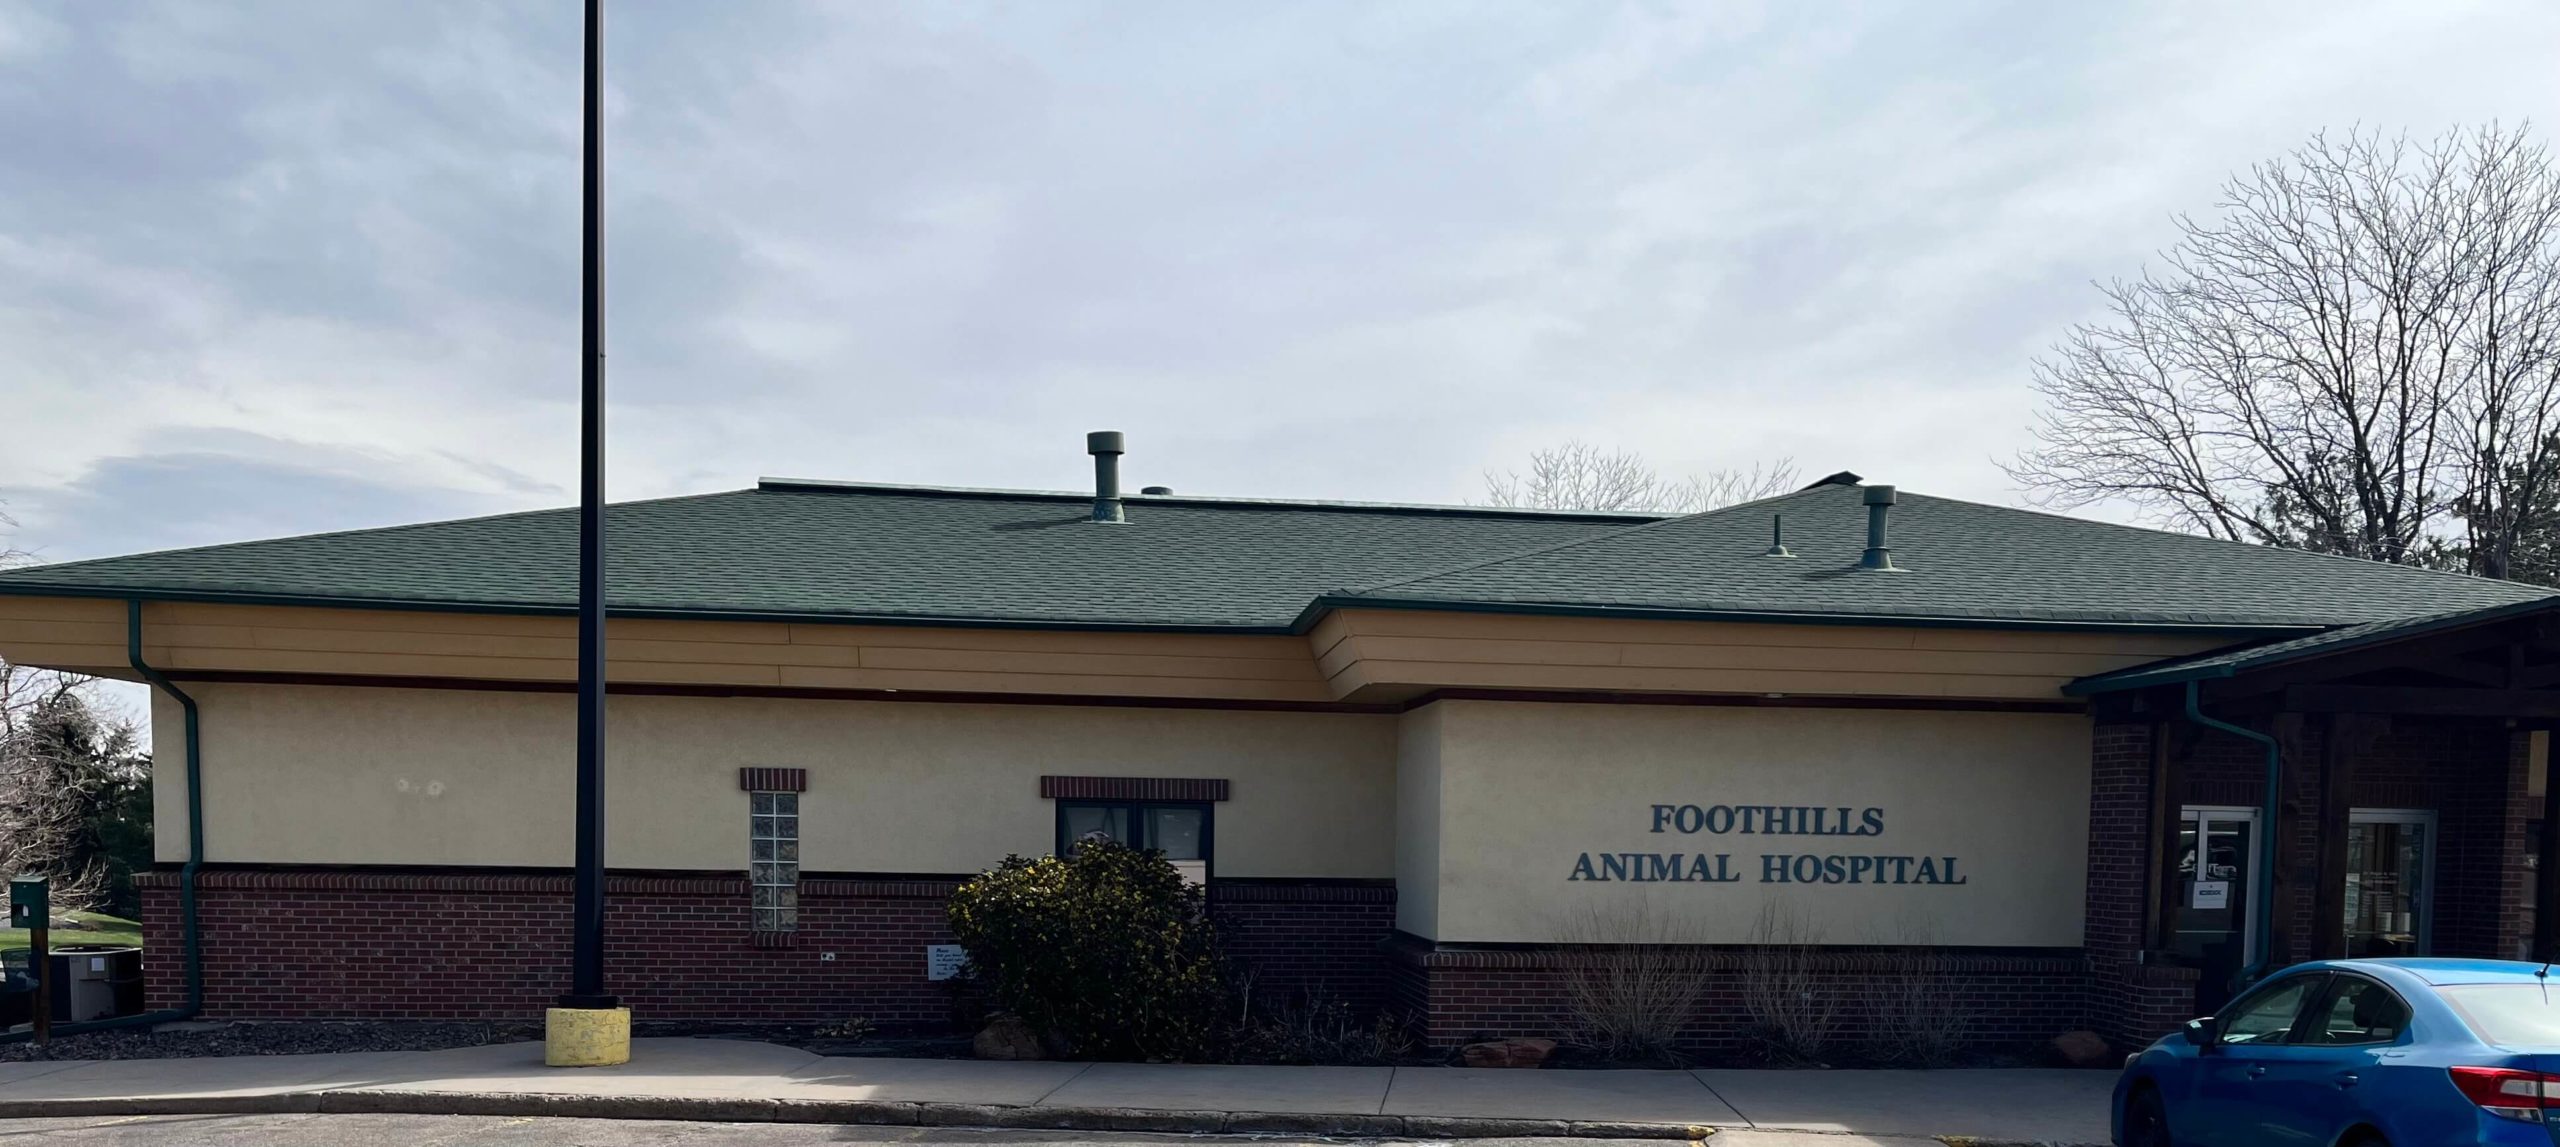 foothills animal hospital building